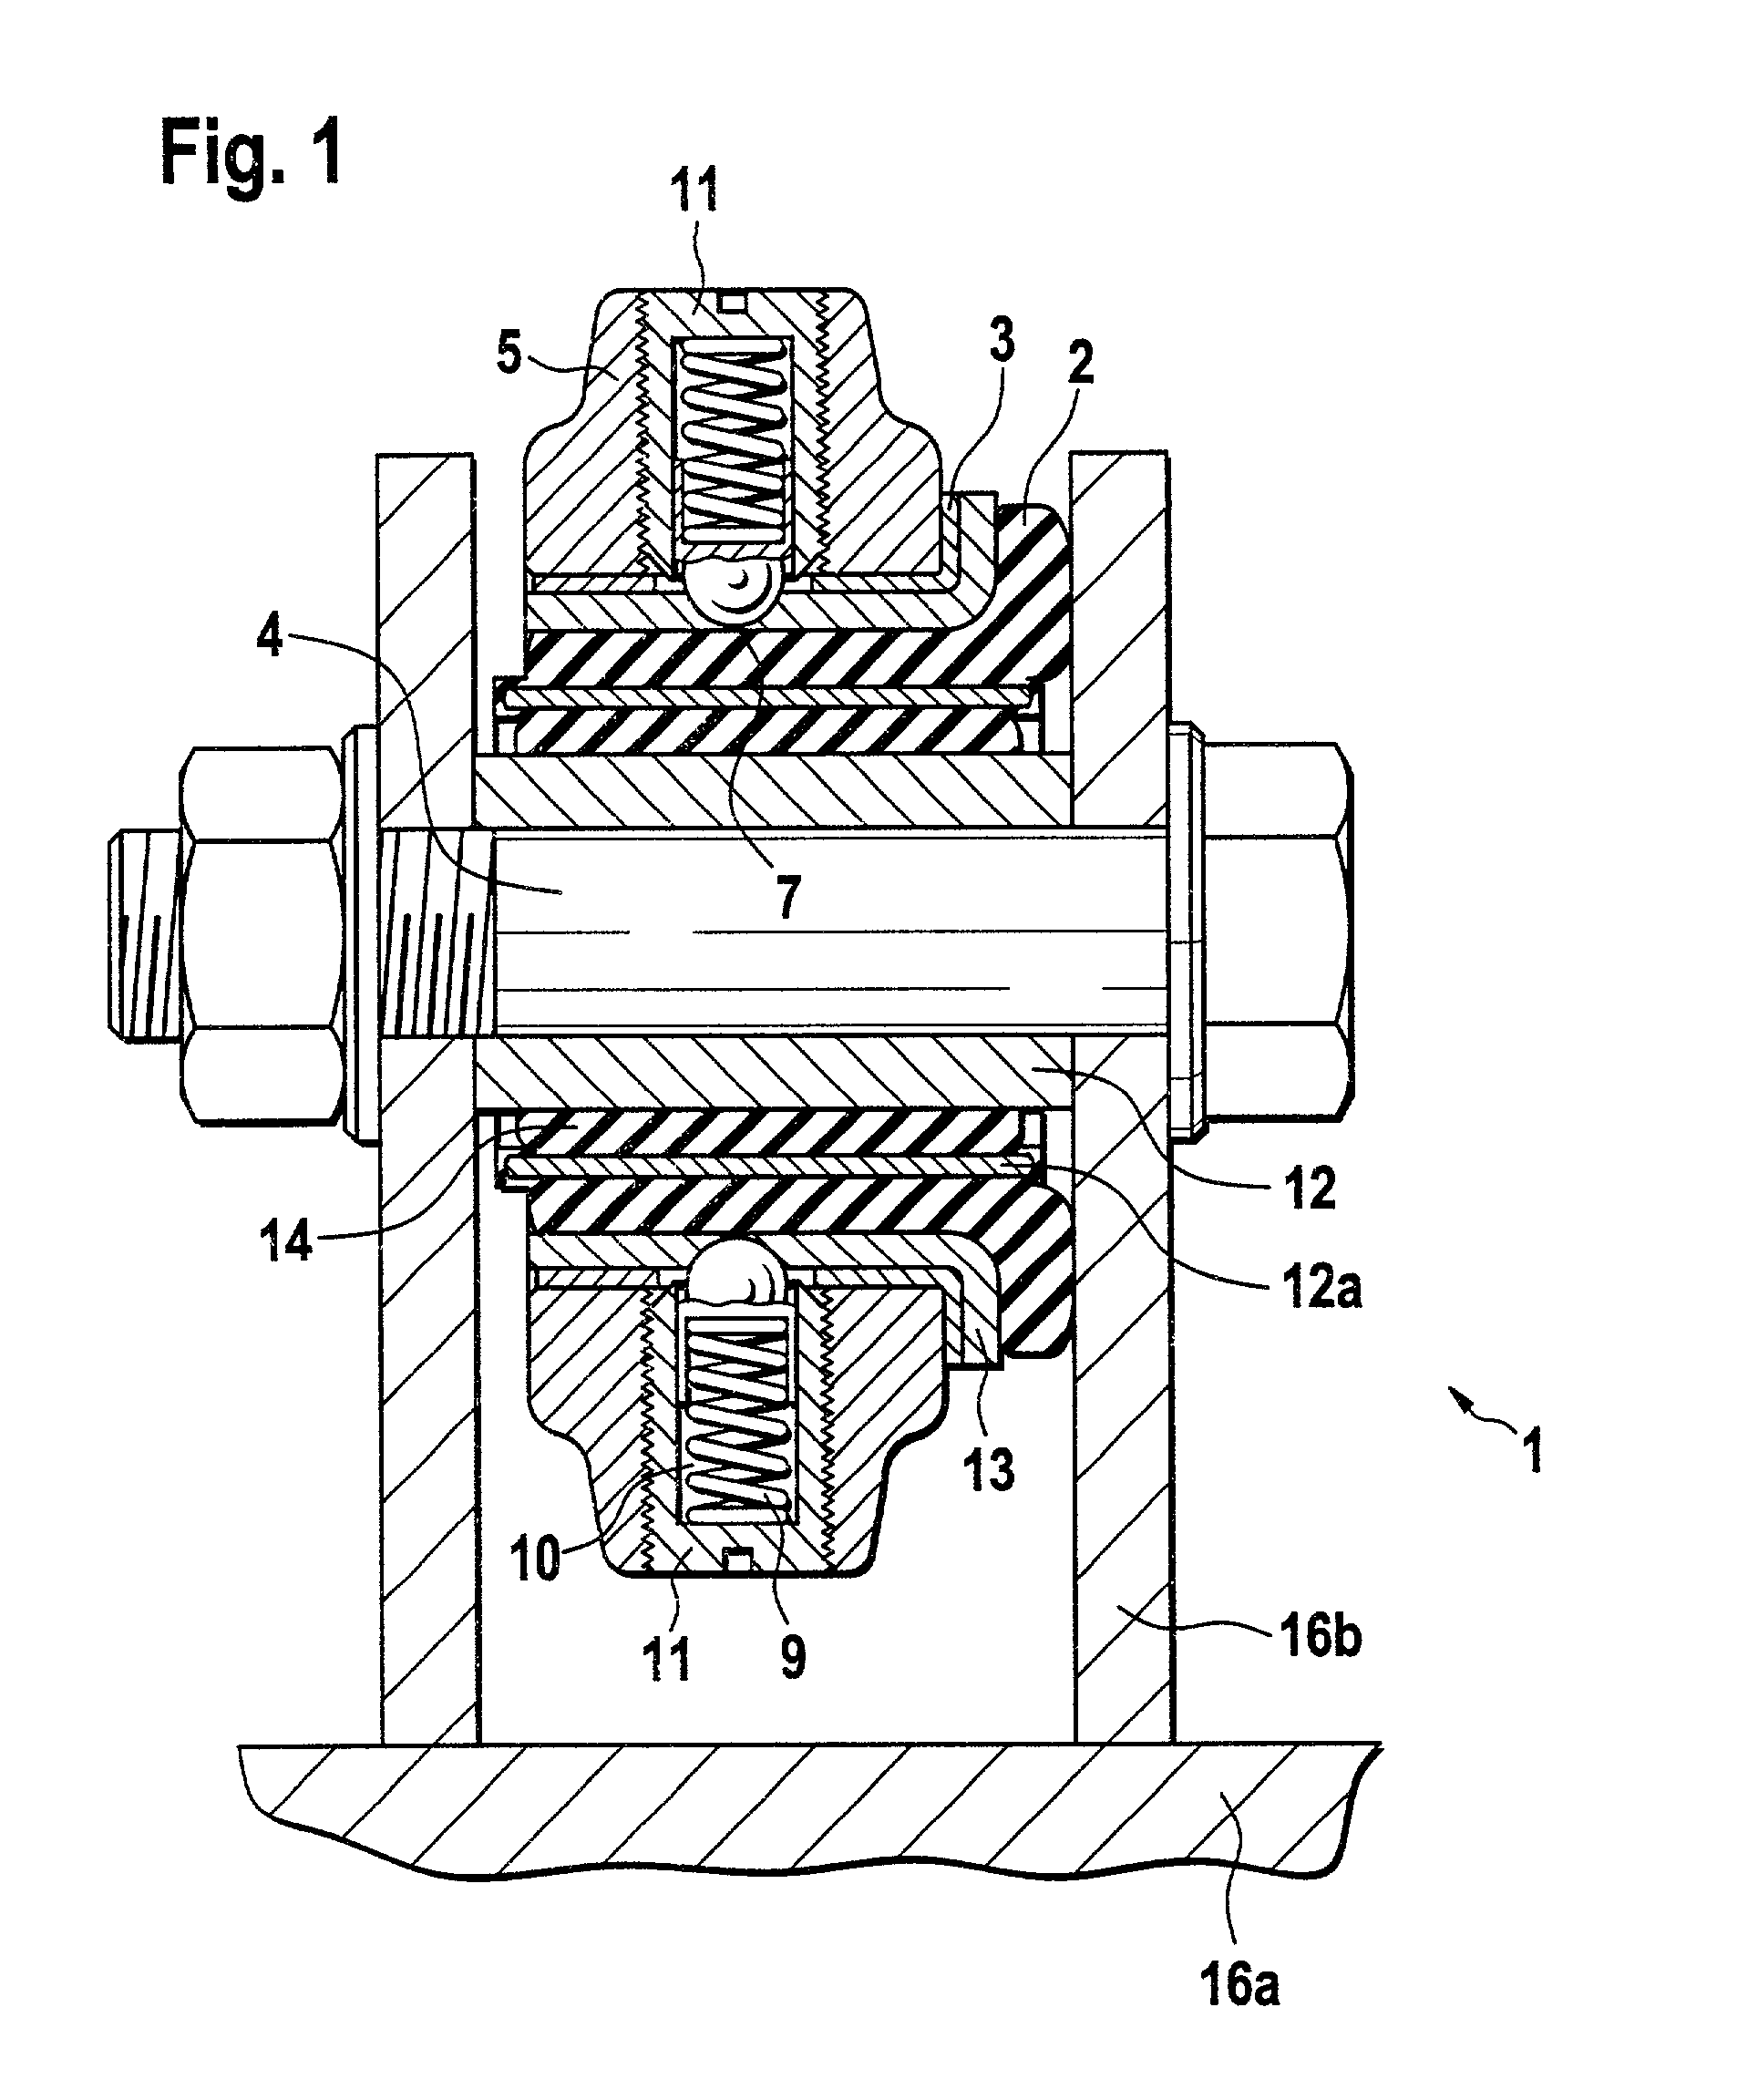 Forward bearing arrangement for the tilting cab of a truck